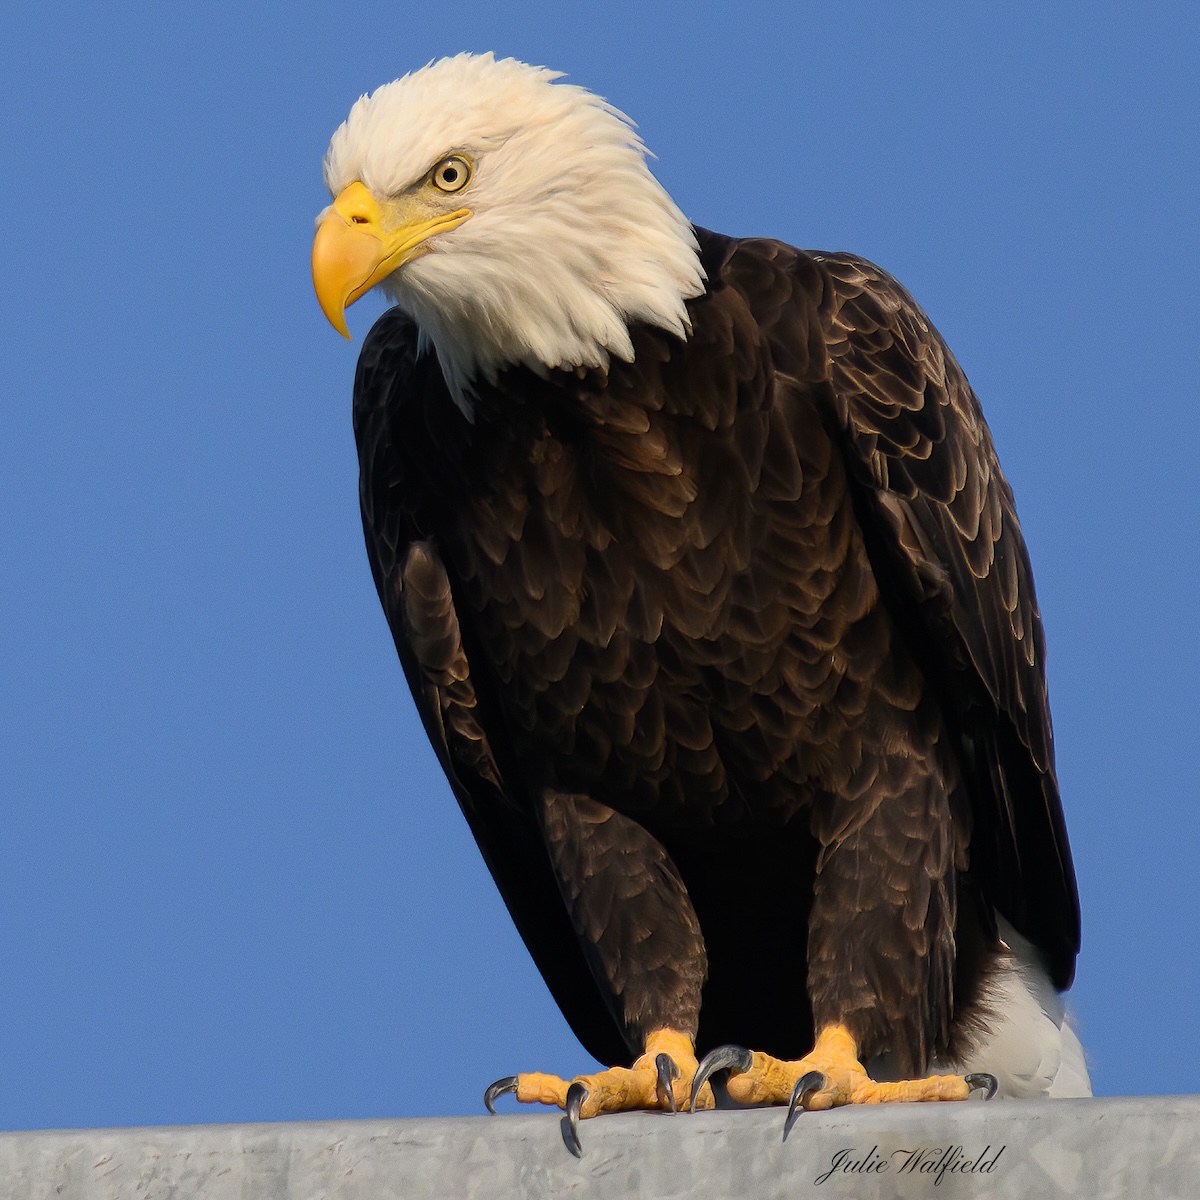 American bald eagle overlooking Briarwood Executive Golf Course